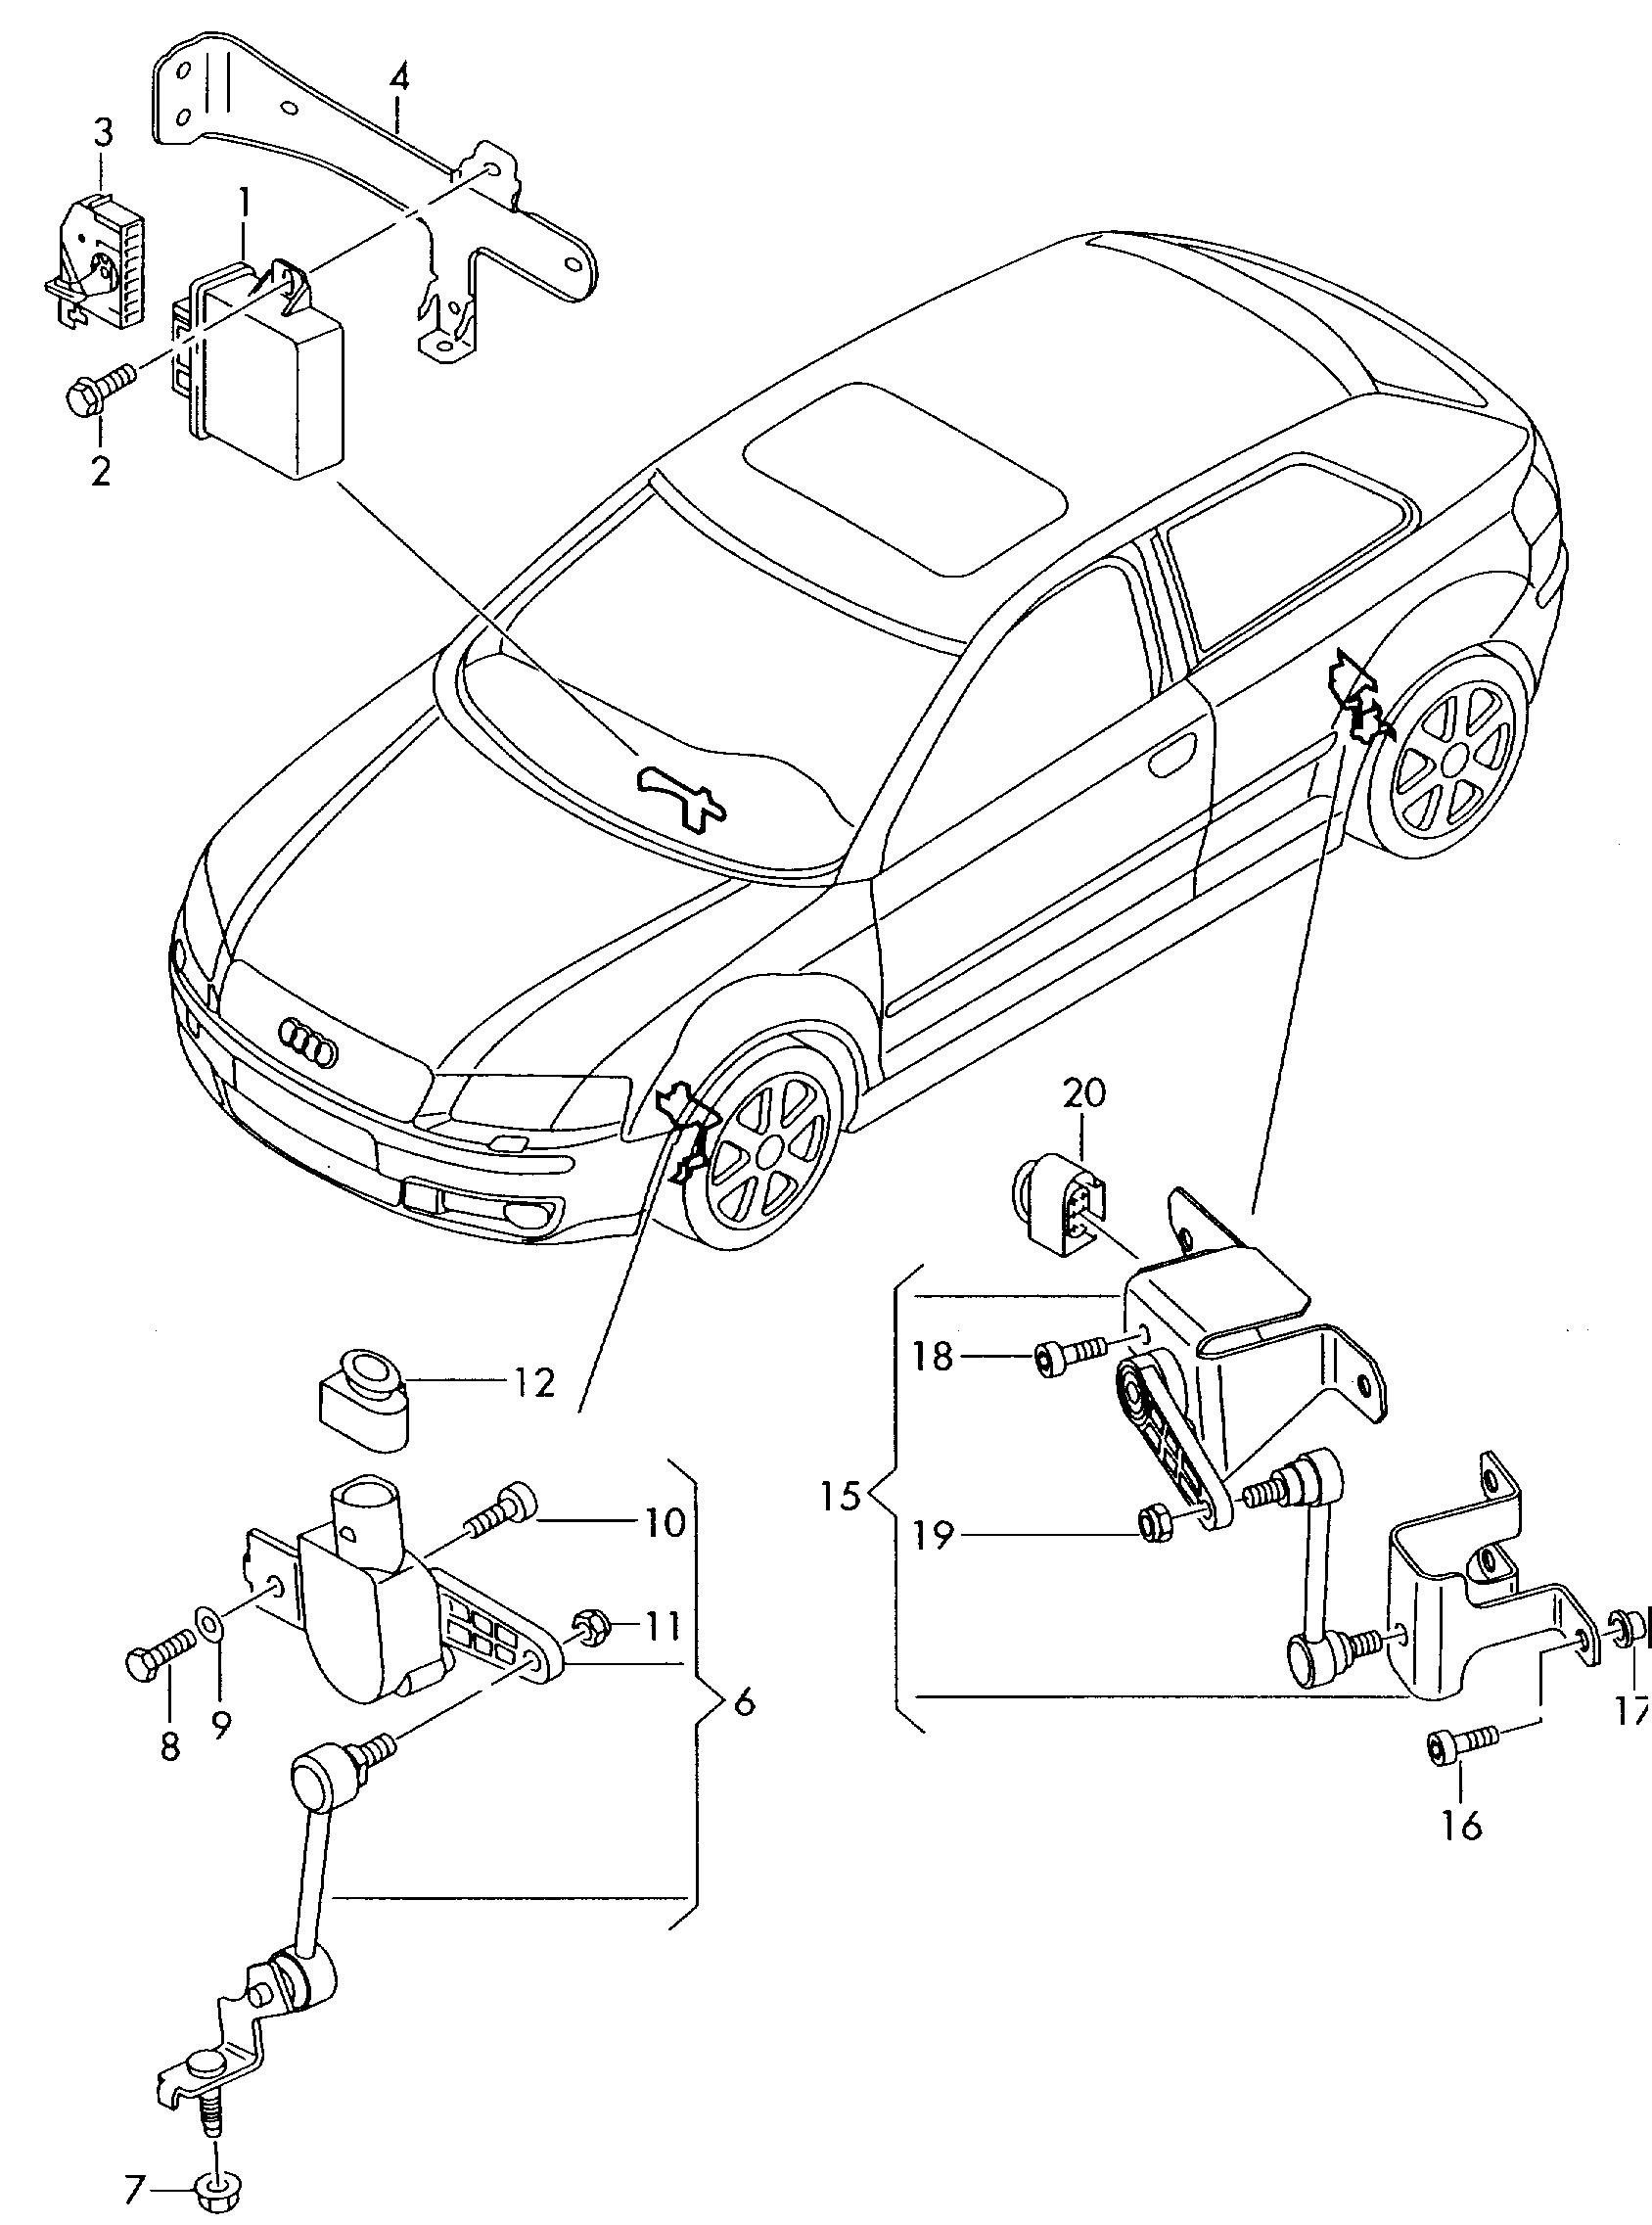 8P] Sensoren automatische Leuchtweitenregulierung ersetzen - HiFi,  Car-Alarm und Elektrik (8P) - A3-Freunde